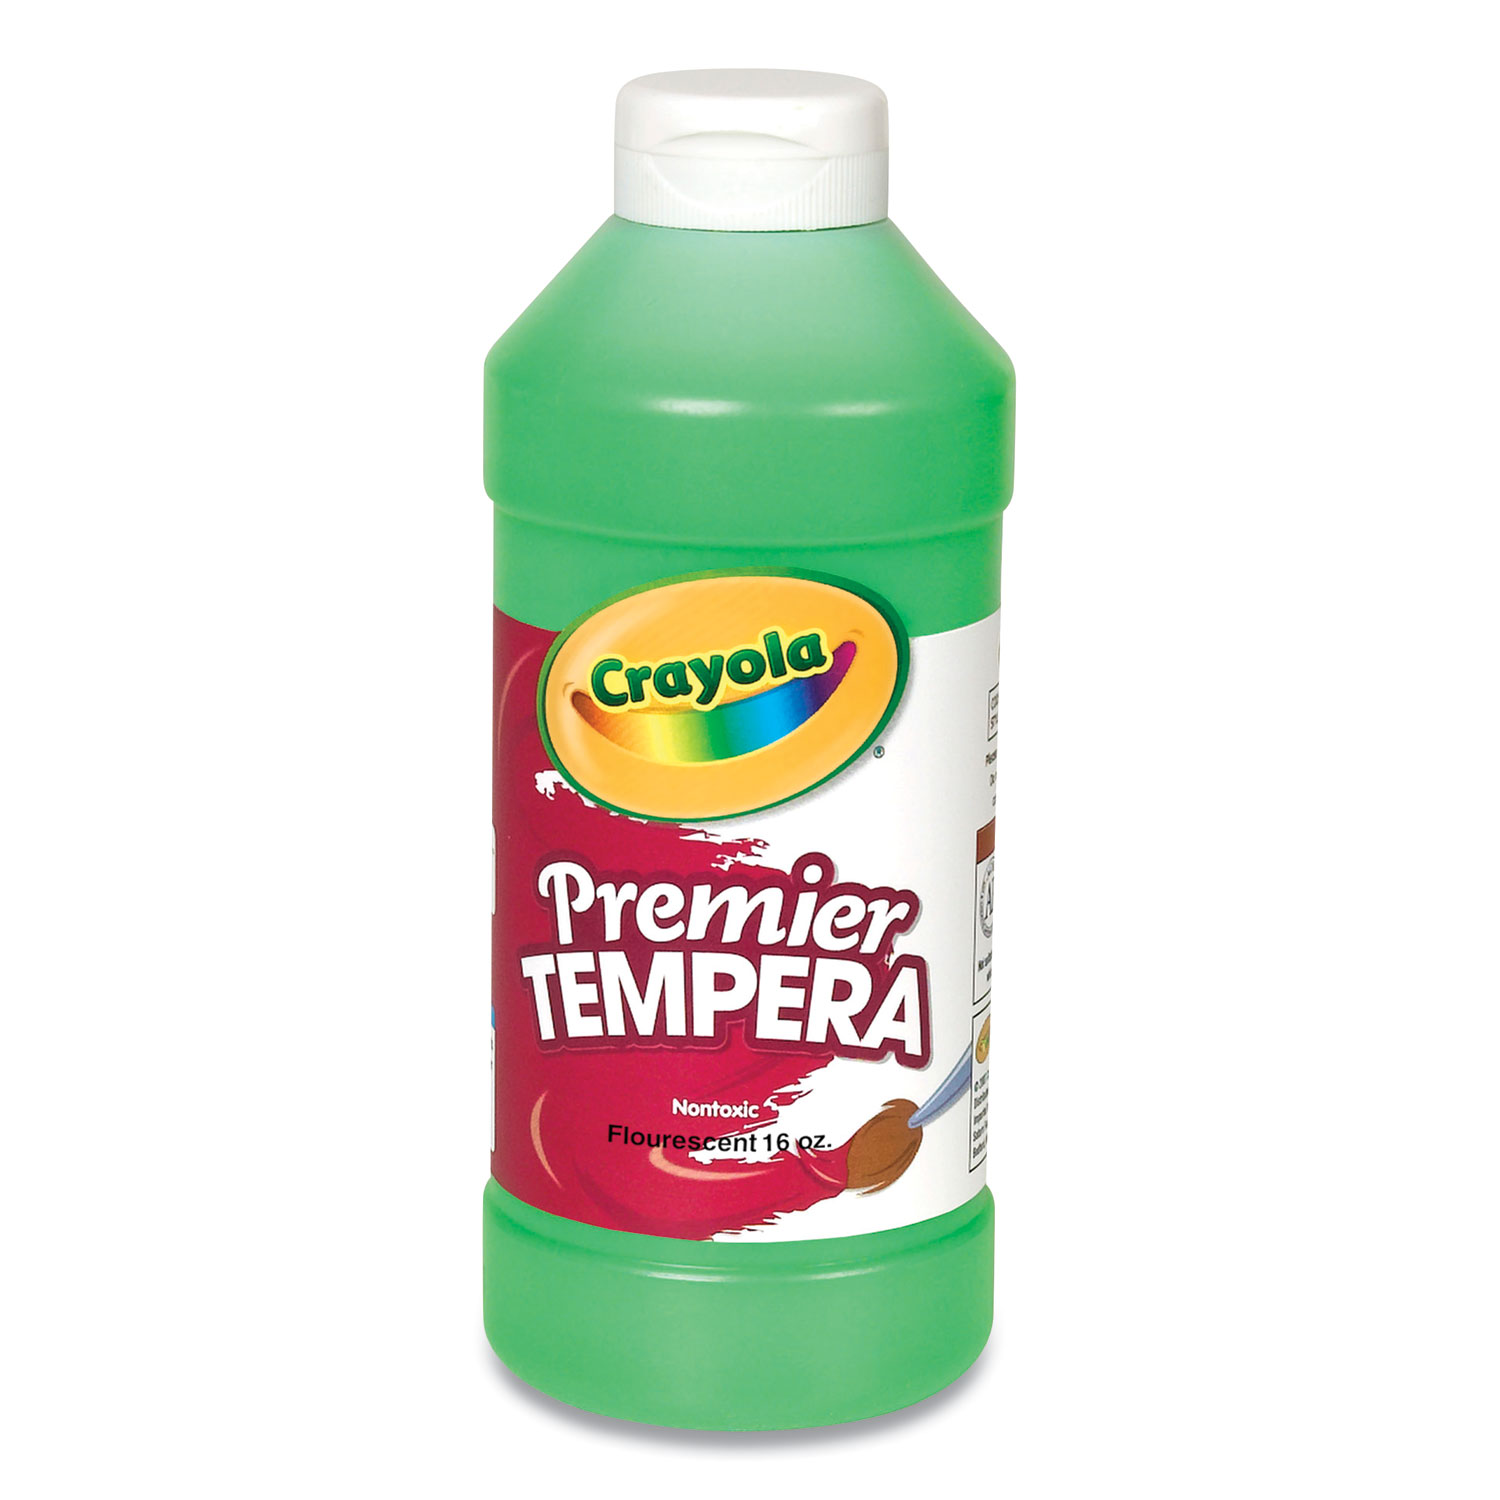 Crayola® Premier Tempera Paint, Glowing Green, 16 oz